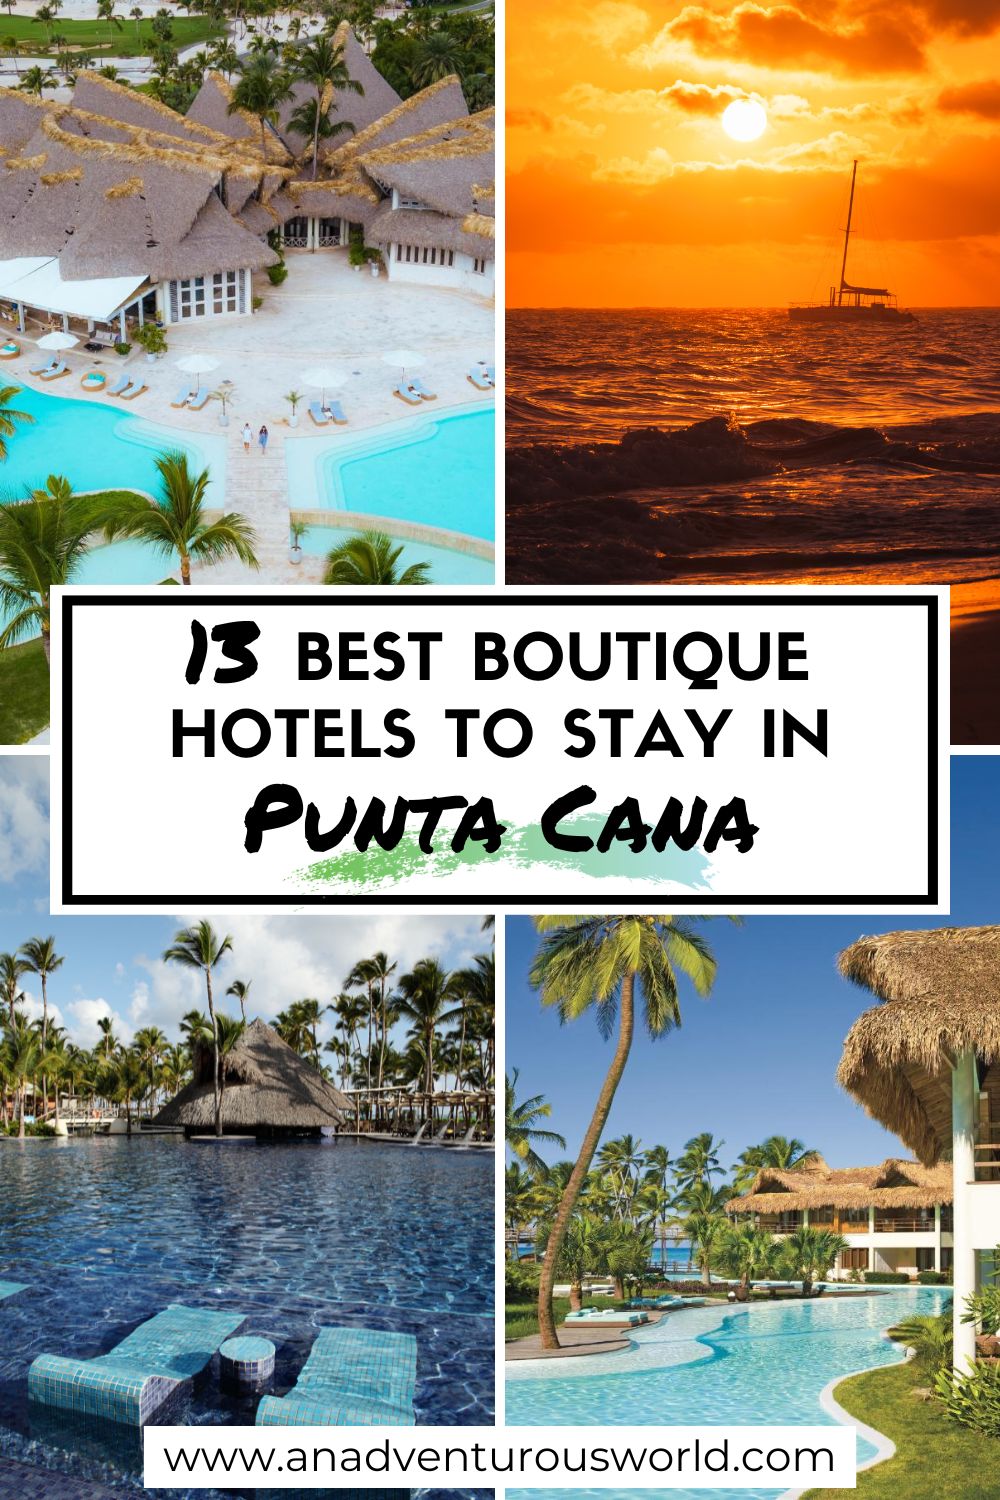 13 Boutique Hotels in Punta Cana, Dominican Republic